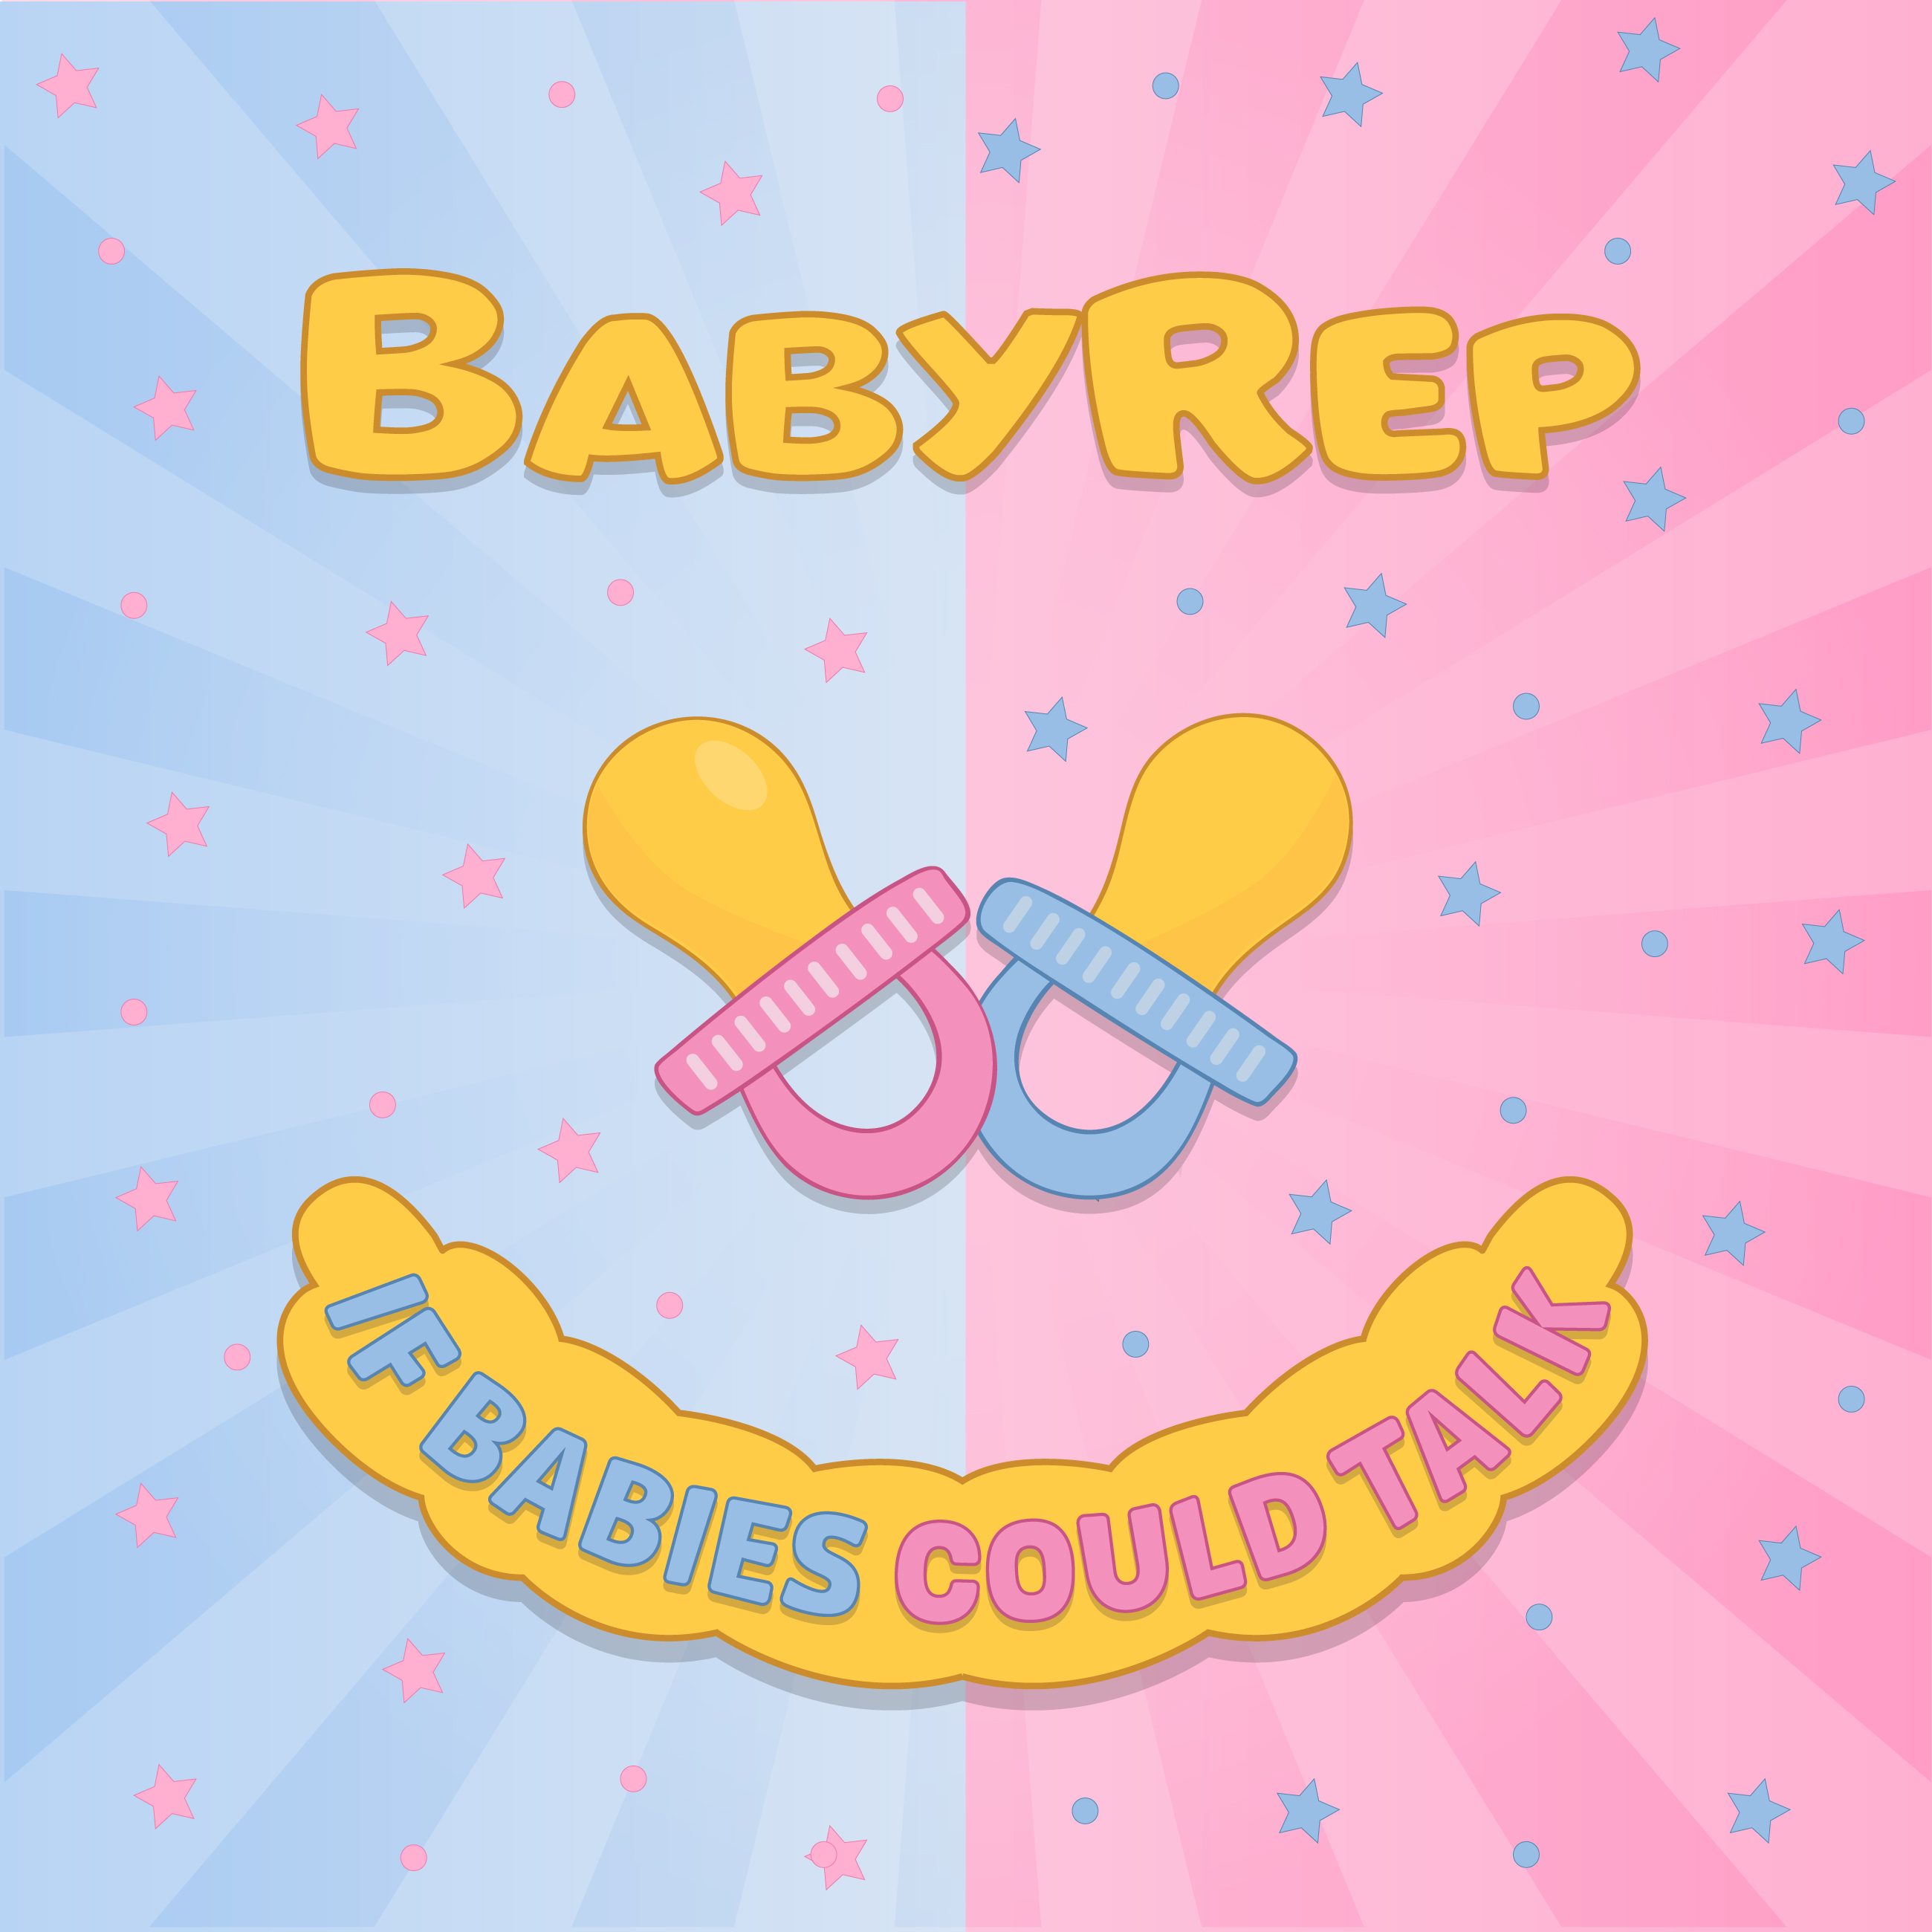 BabyRep - IF BABIES COULD TALK